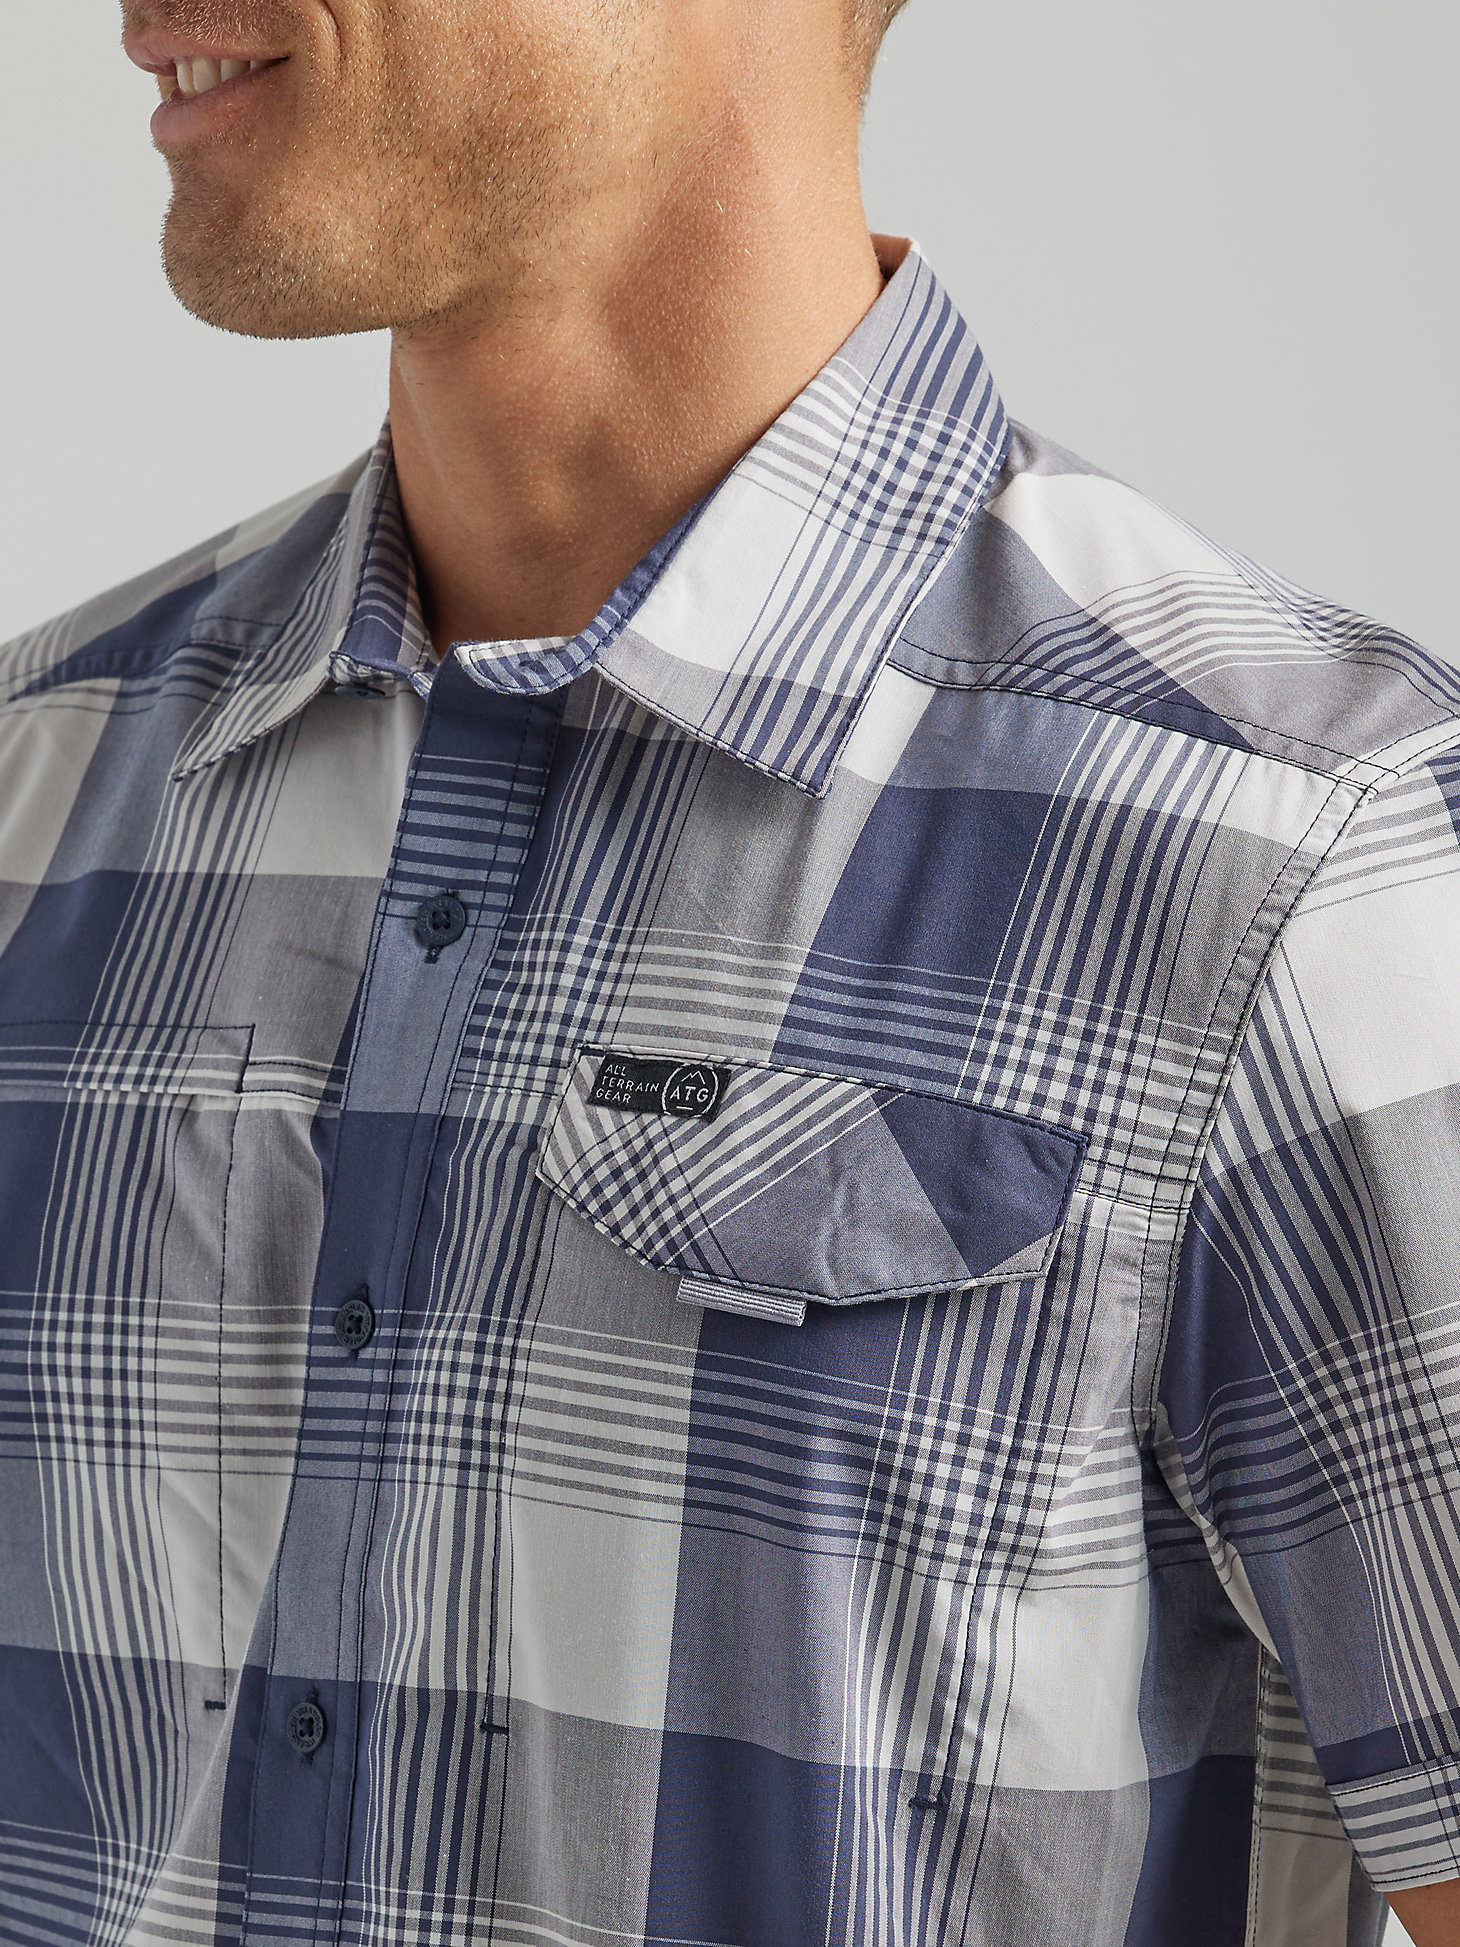 ATG By Wrangler™ Men's Asymmetrical Zip Pocket Plaid Shirt in Mist alternative view 3